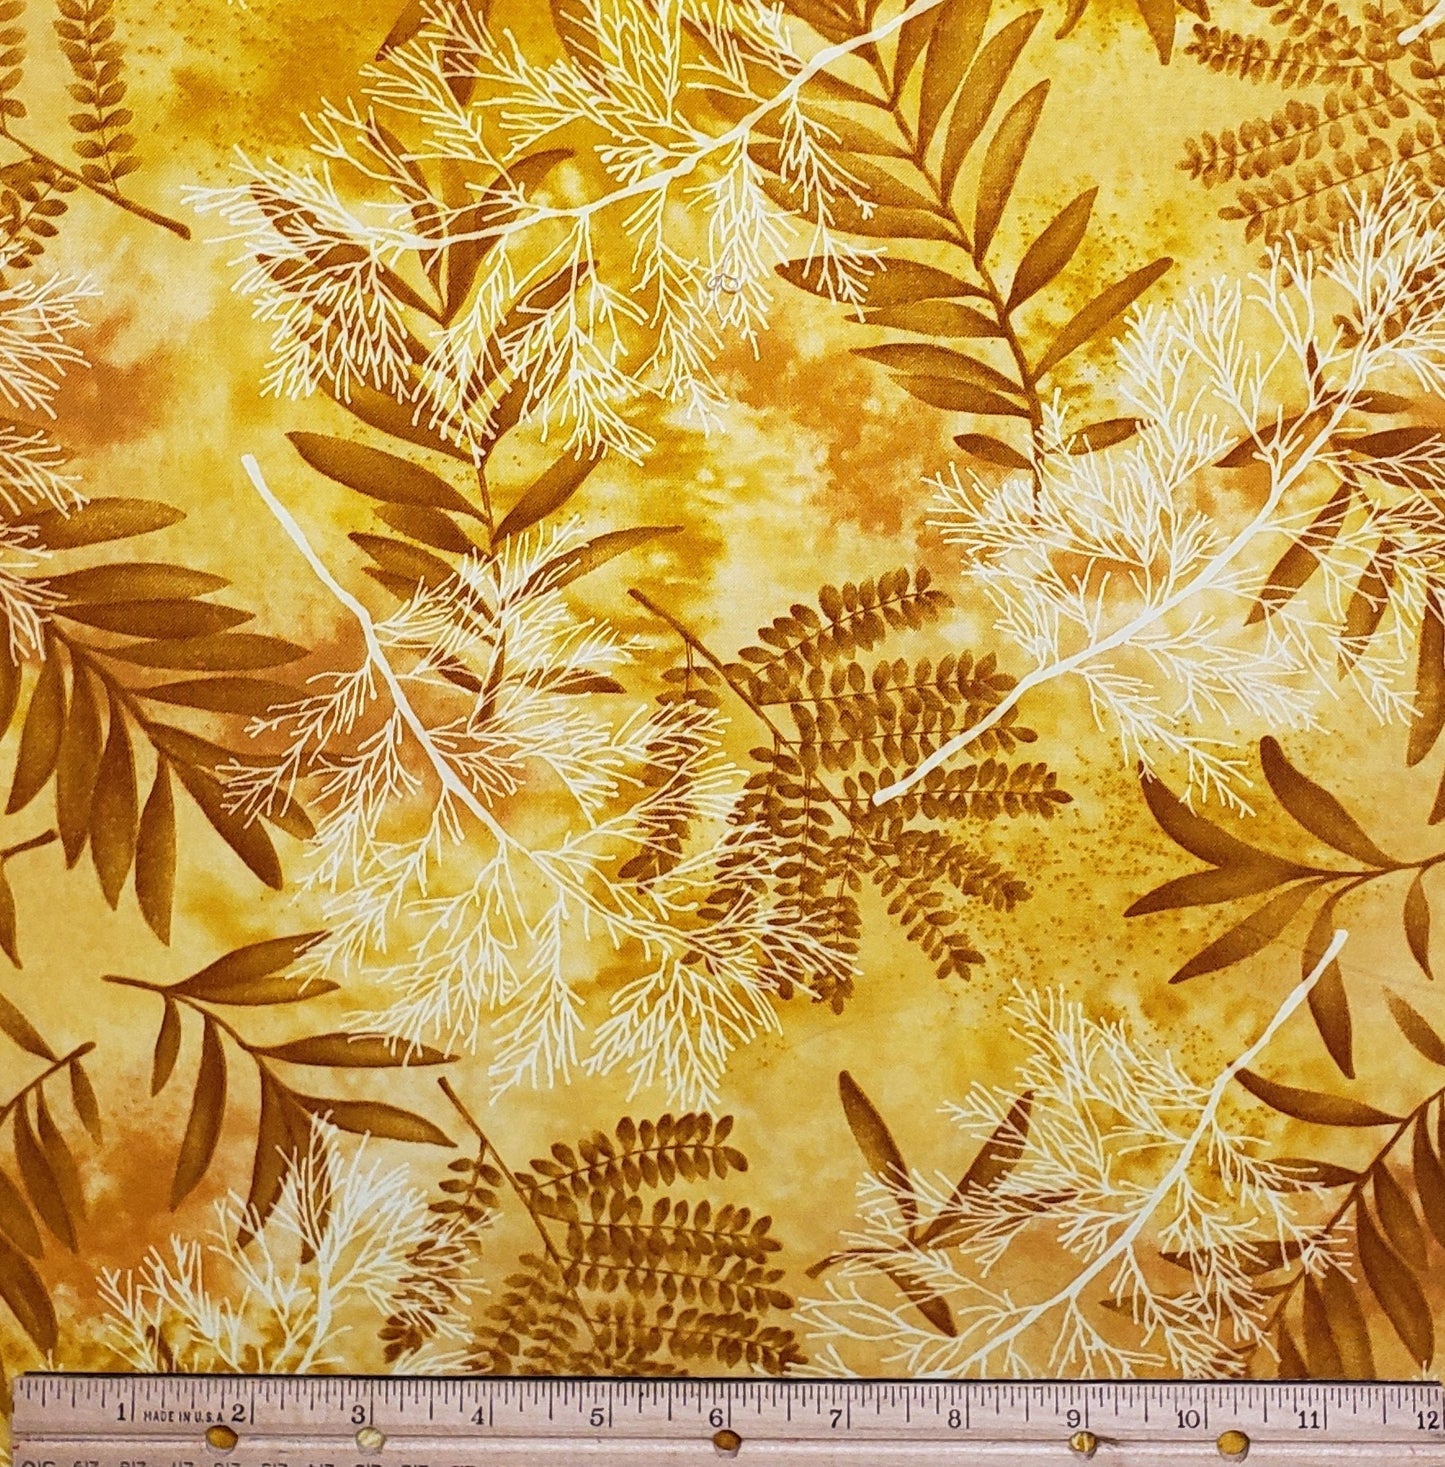 Timeless Treasures Fabrics, Inc. Patt # FERN-C6323 - Dark Yellow and Gold Tonal Fabric / Darker Gold Fern Print and White Branches